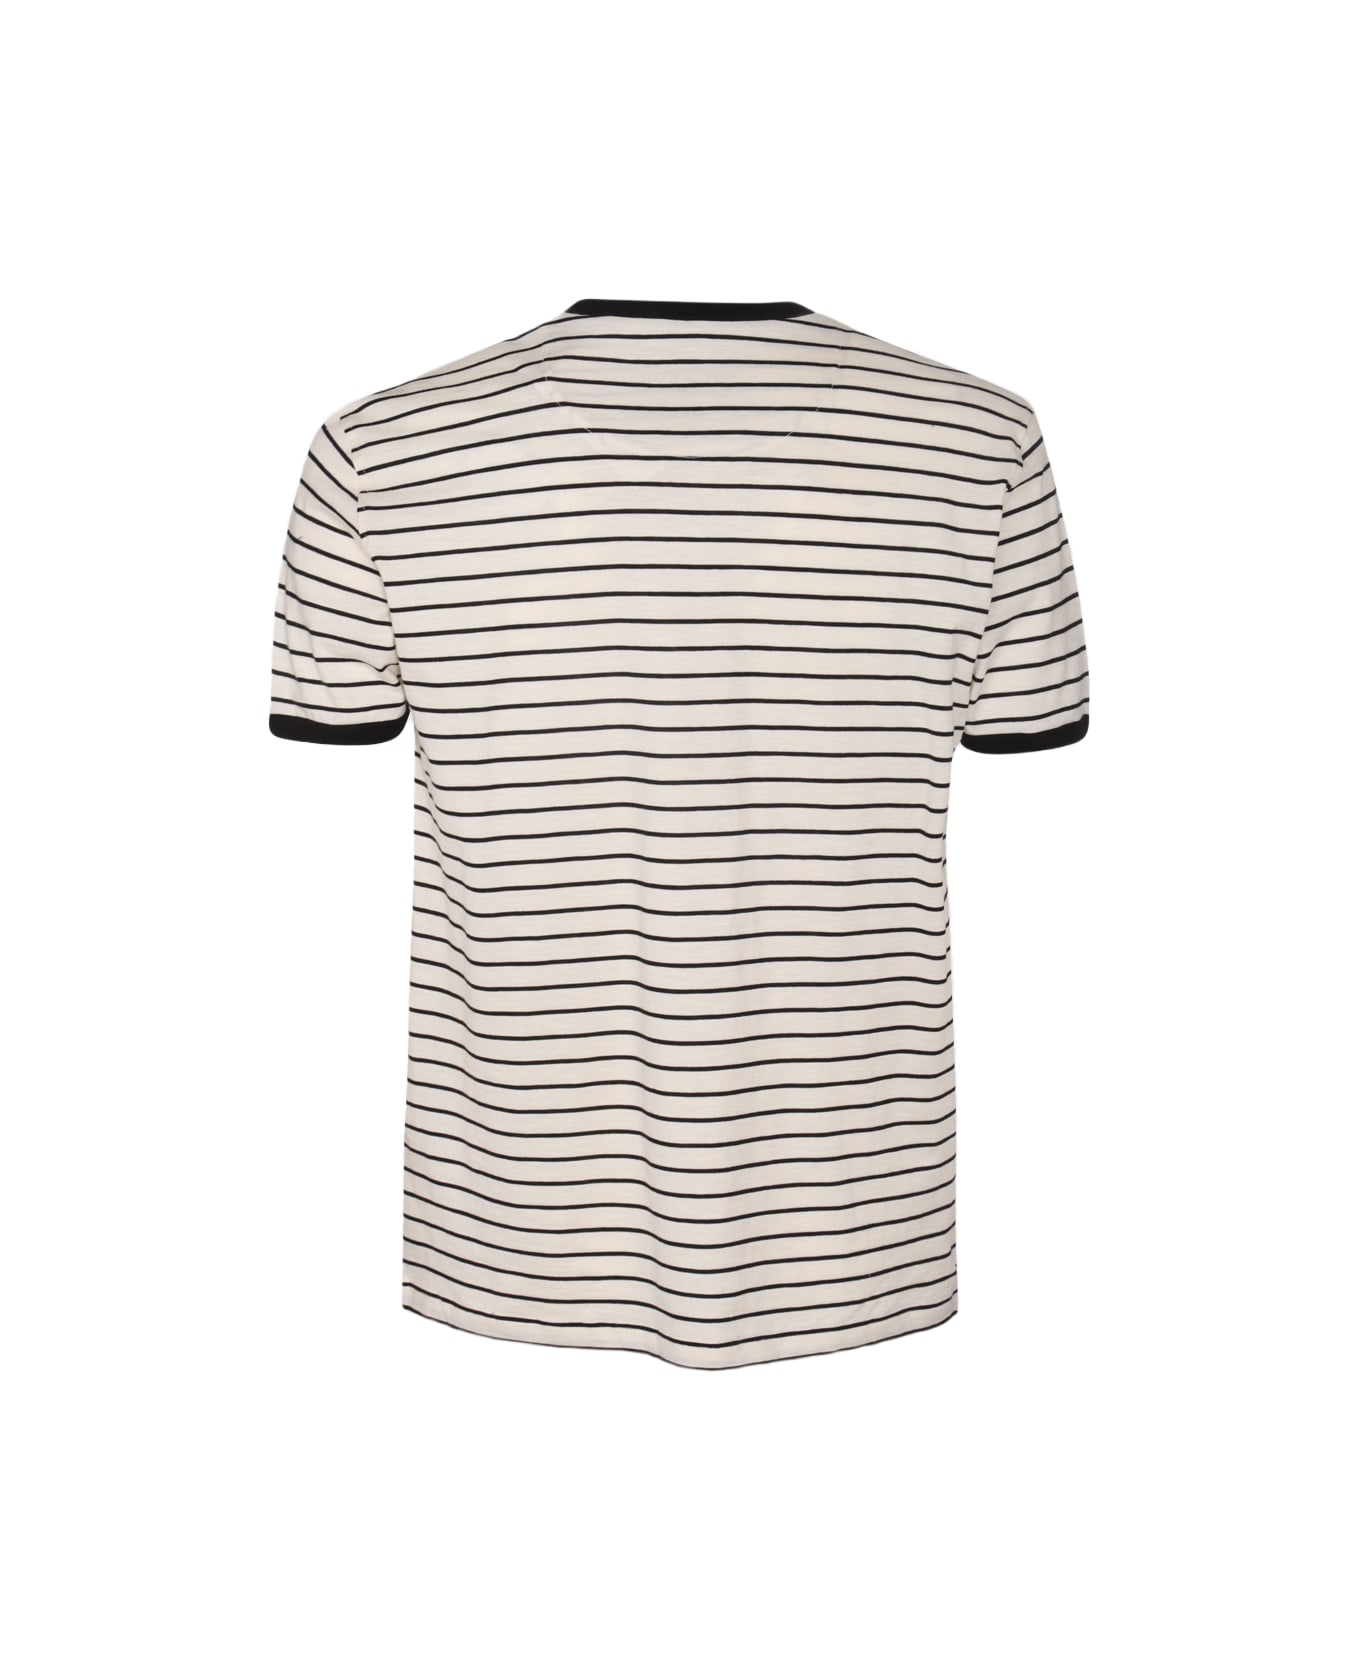 PT Torino Black And White Cotton Stripe T-shirt - Black